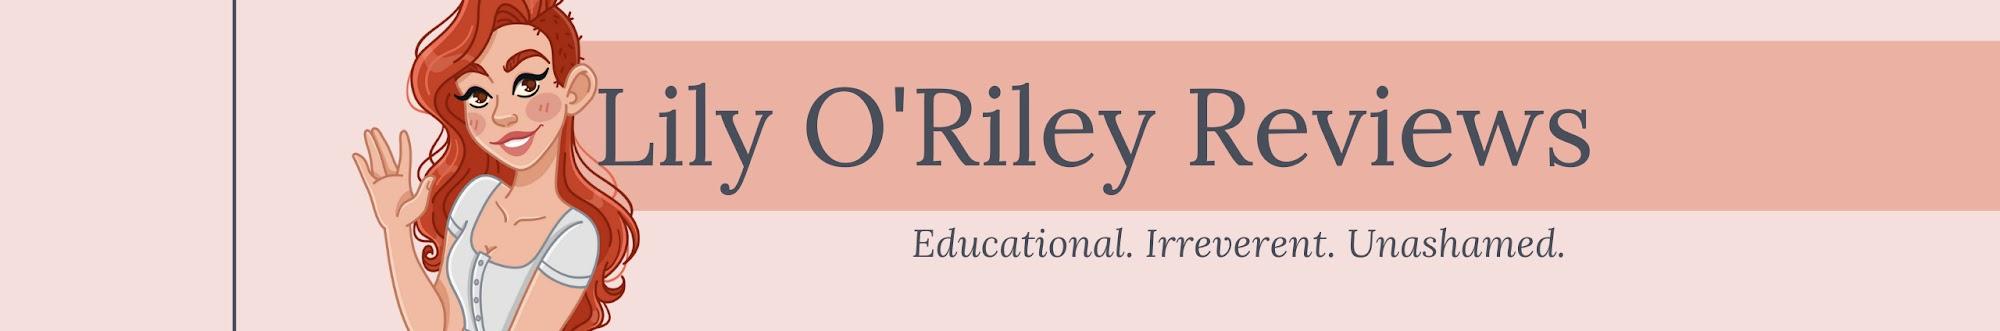 Lily O'Riley